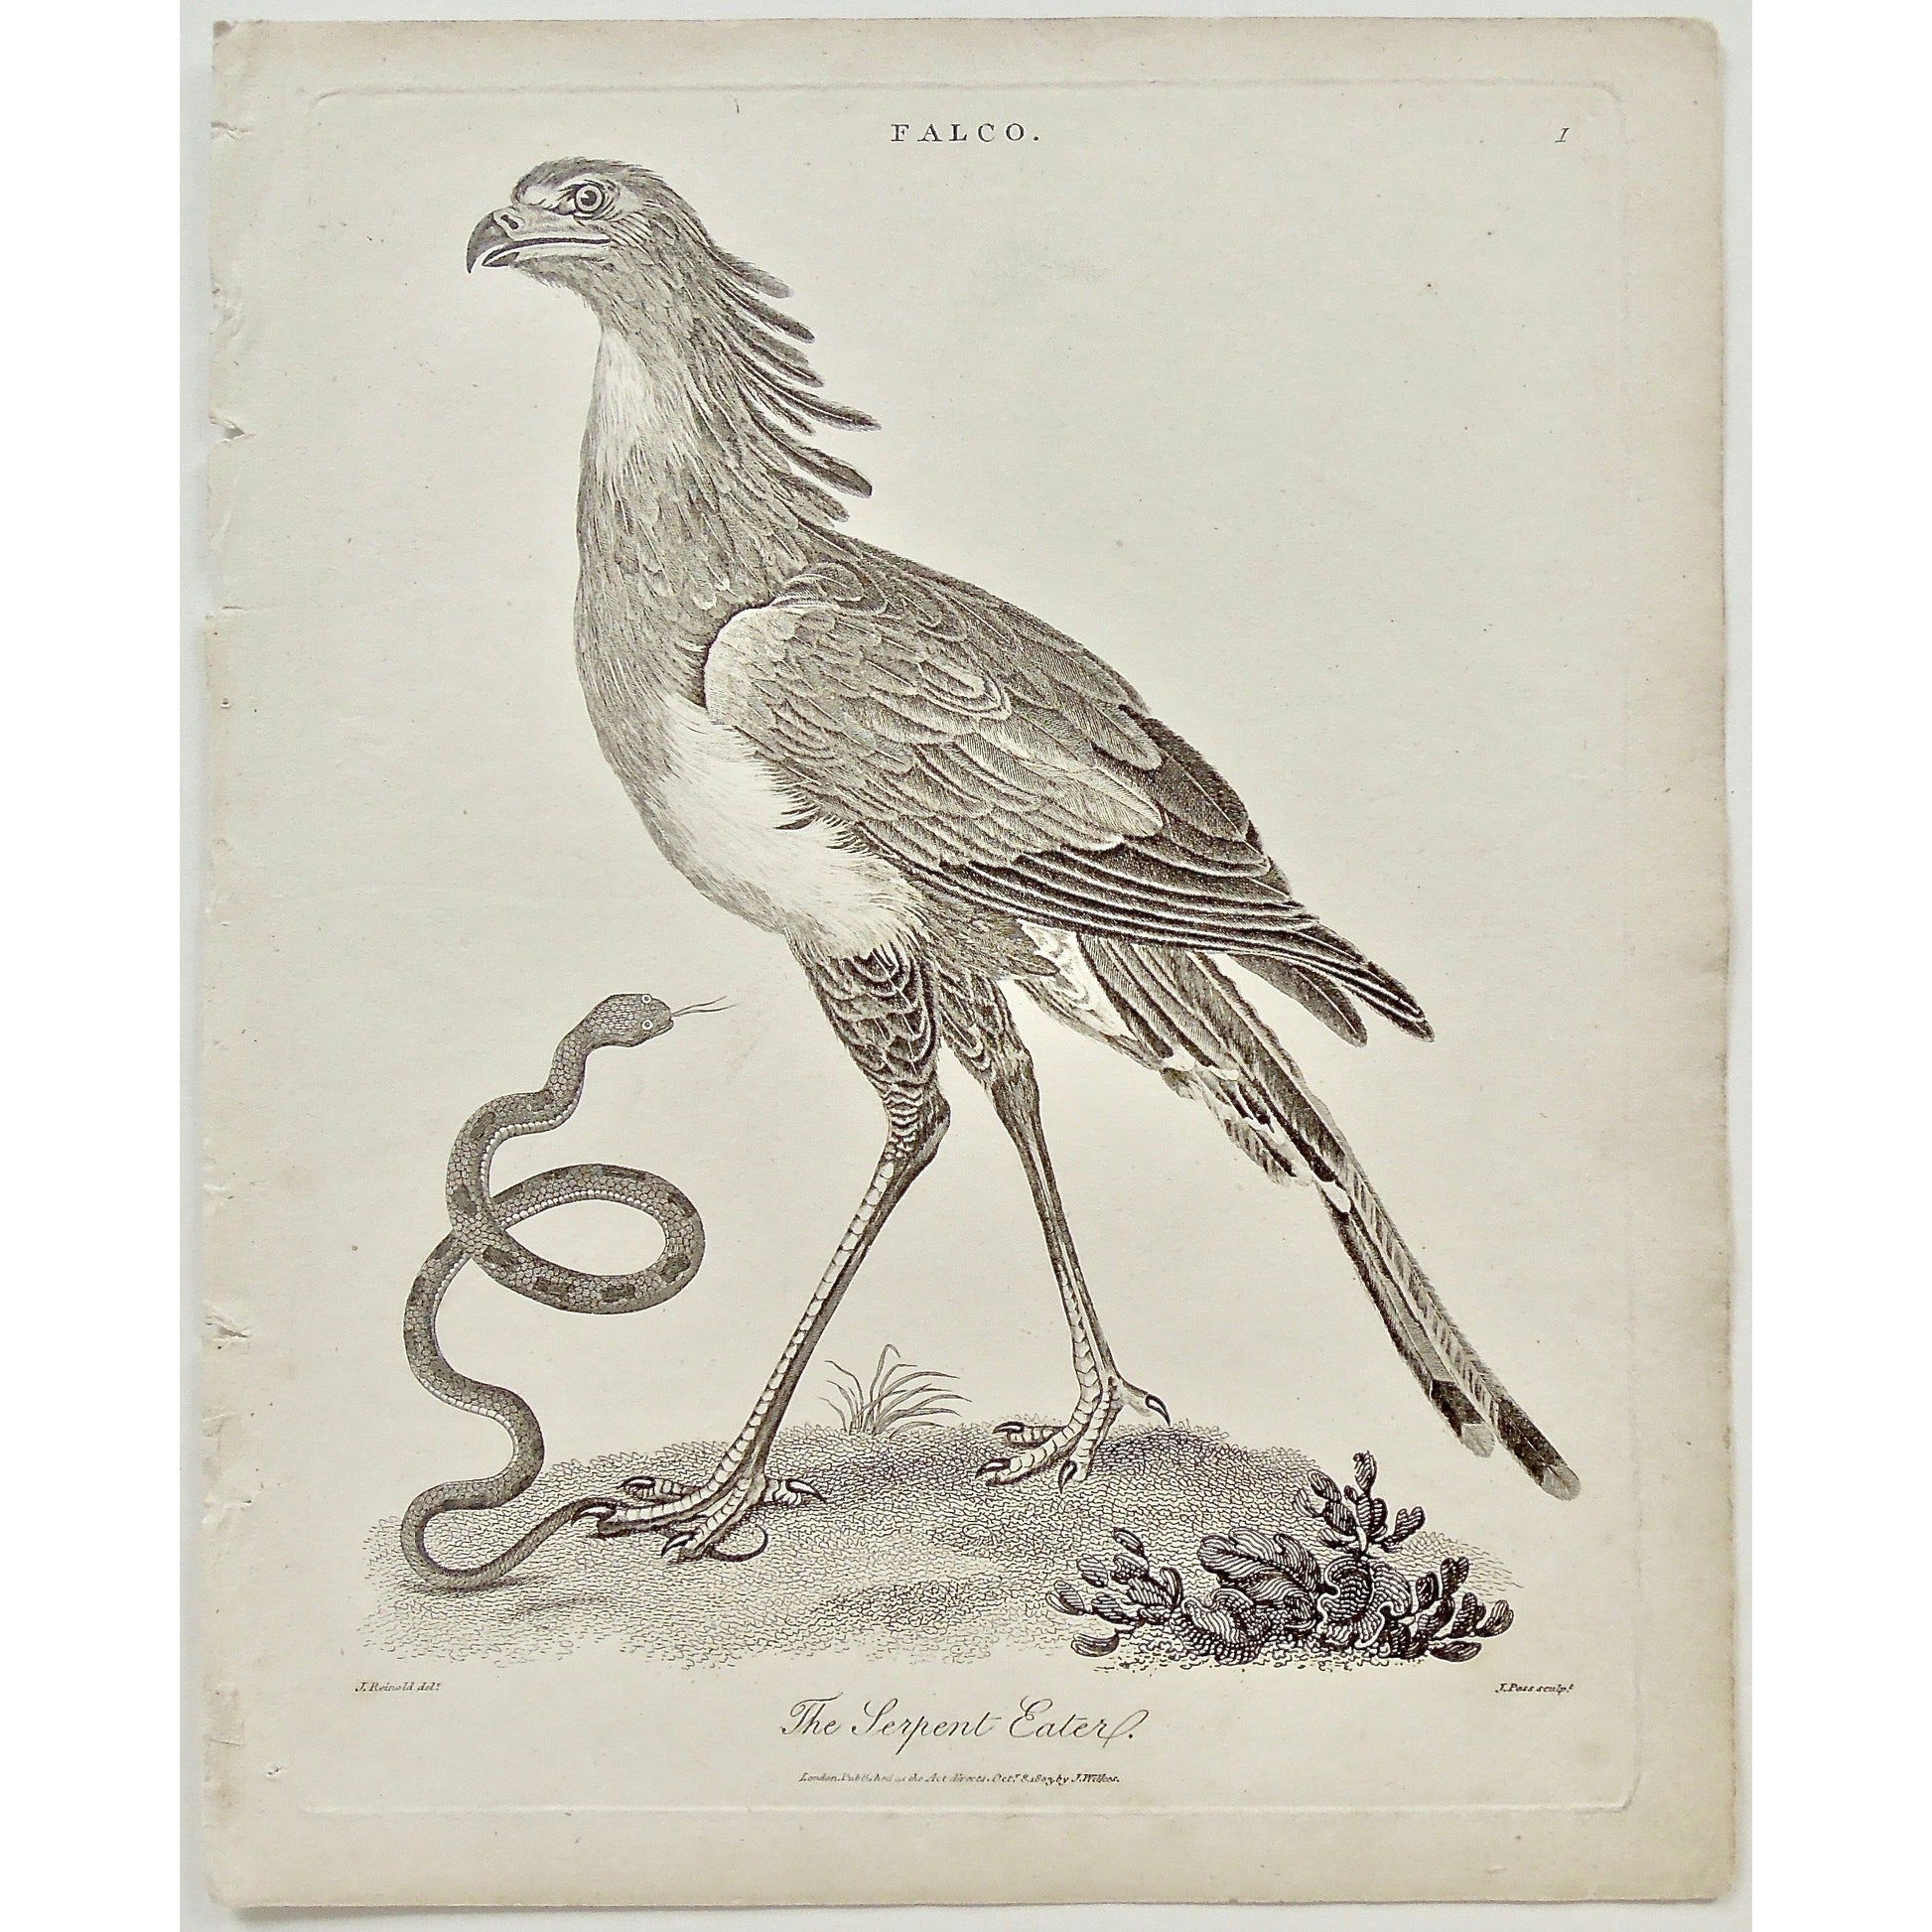 Falco, Falcon, Serpent Eater, Serpent, Eater, Snake, Snakes, Serpents, bird, Birds, Ornithology, Falconry, beak,